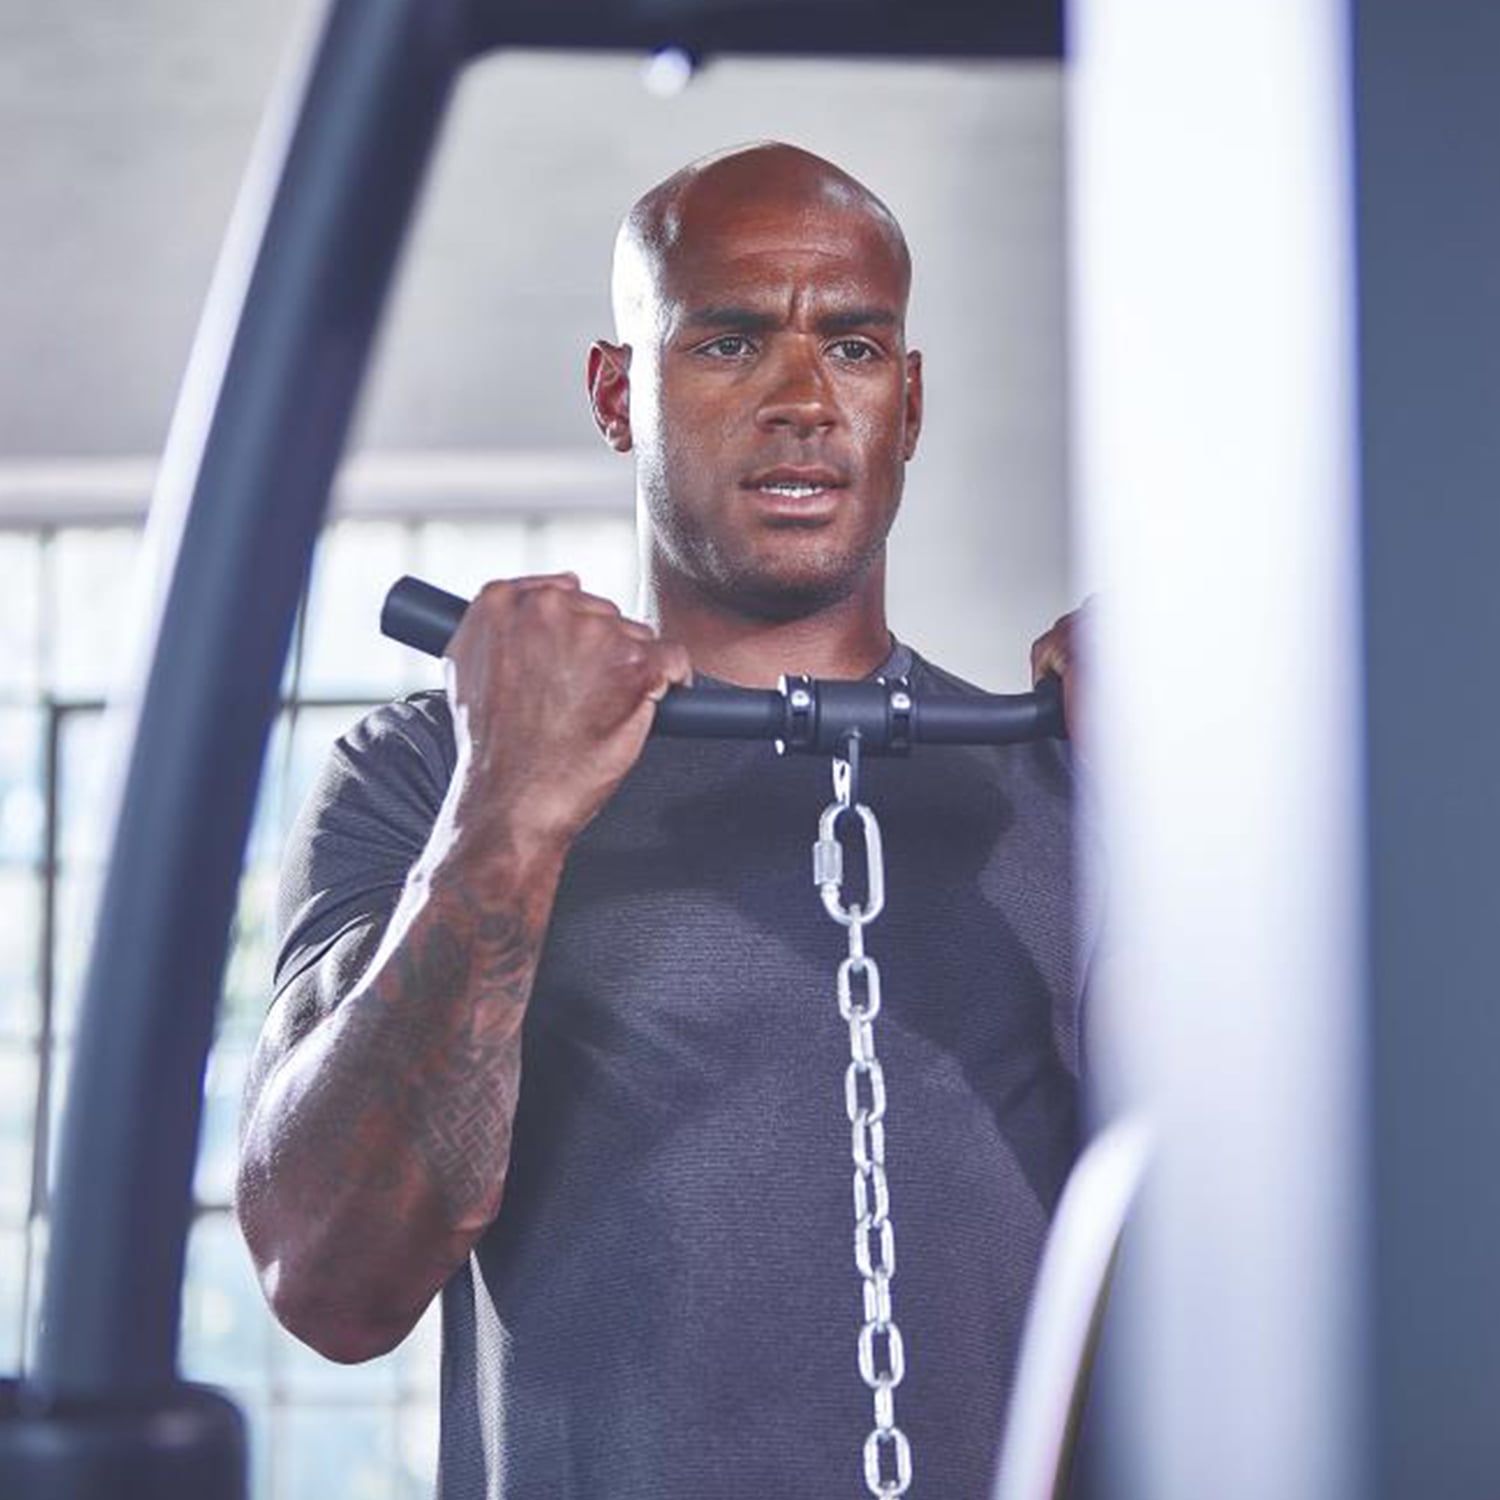 tallarines Nuevo significado a lo largo adidas Performance Full Body Strength Training Home Gym with Scan to Train  - Walmart.com